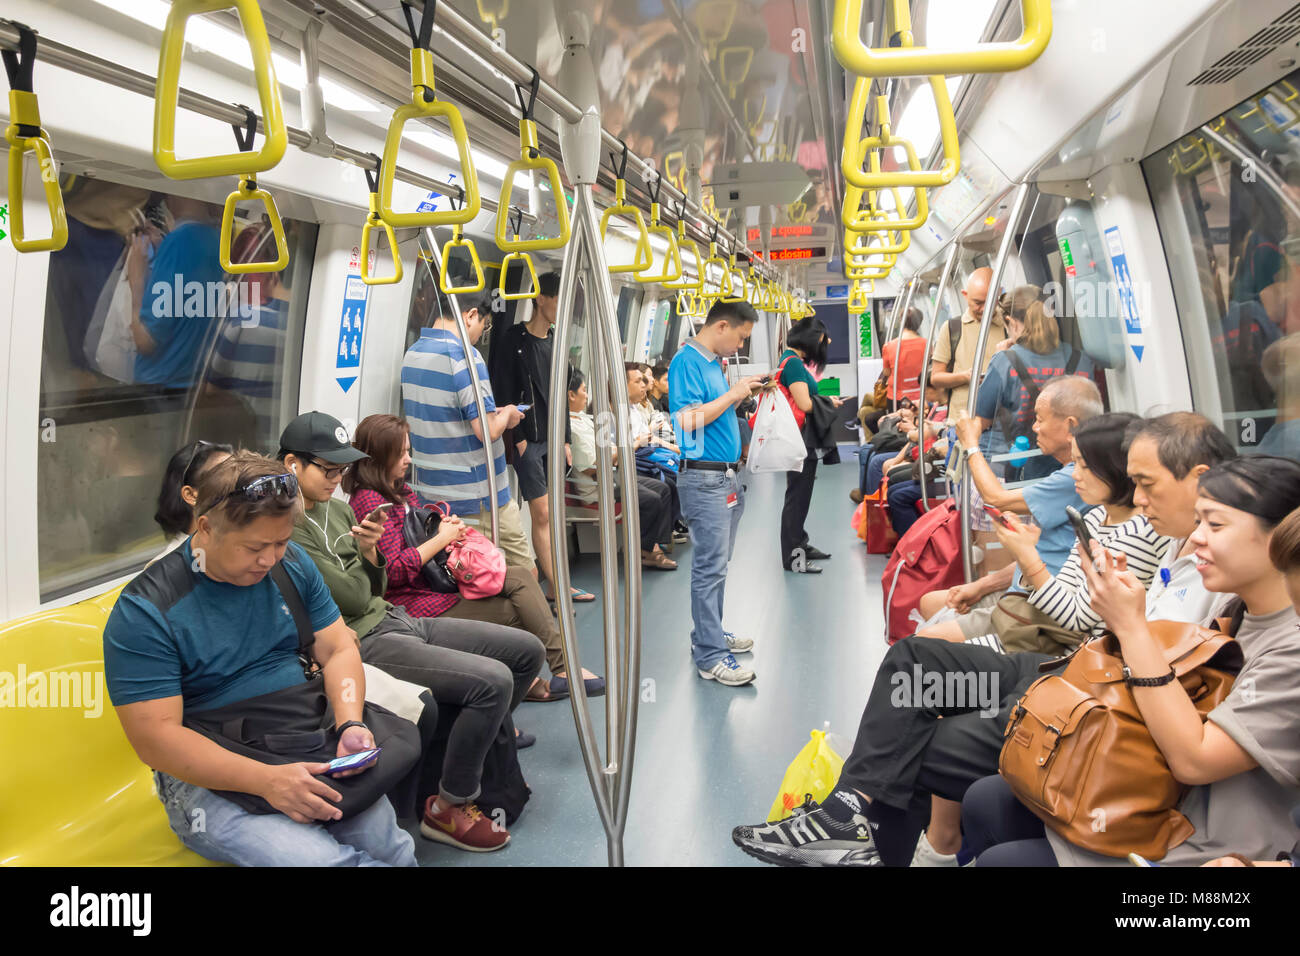 Carriage interior on Singapore Mass Rapid Transit (MRT), Serangoon, North-East Region, Singapore Stock Photo